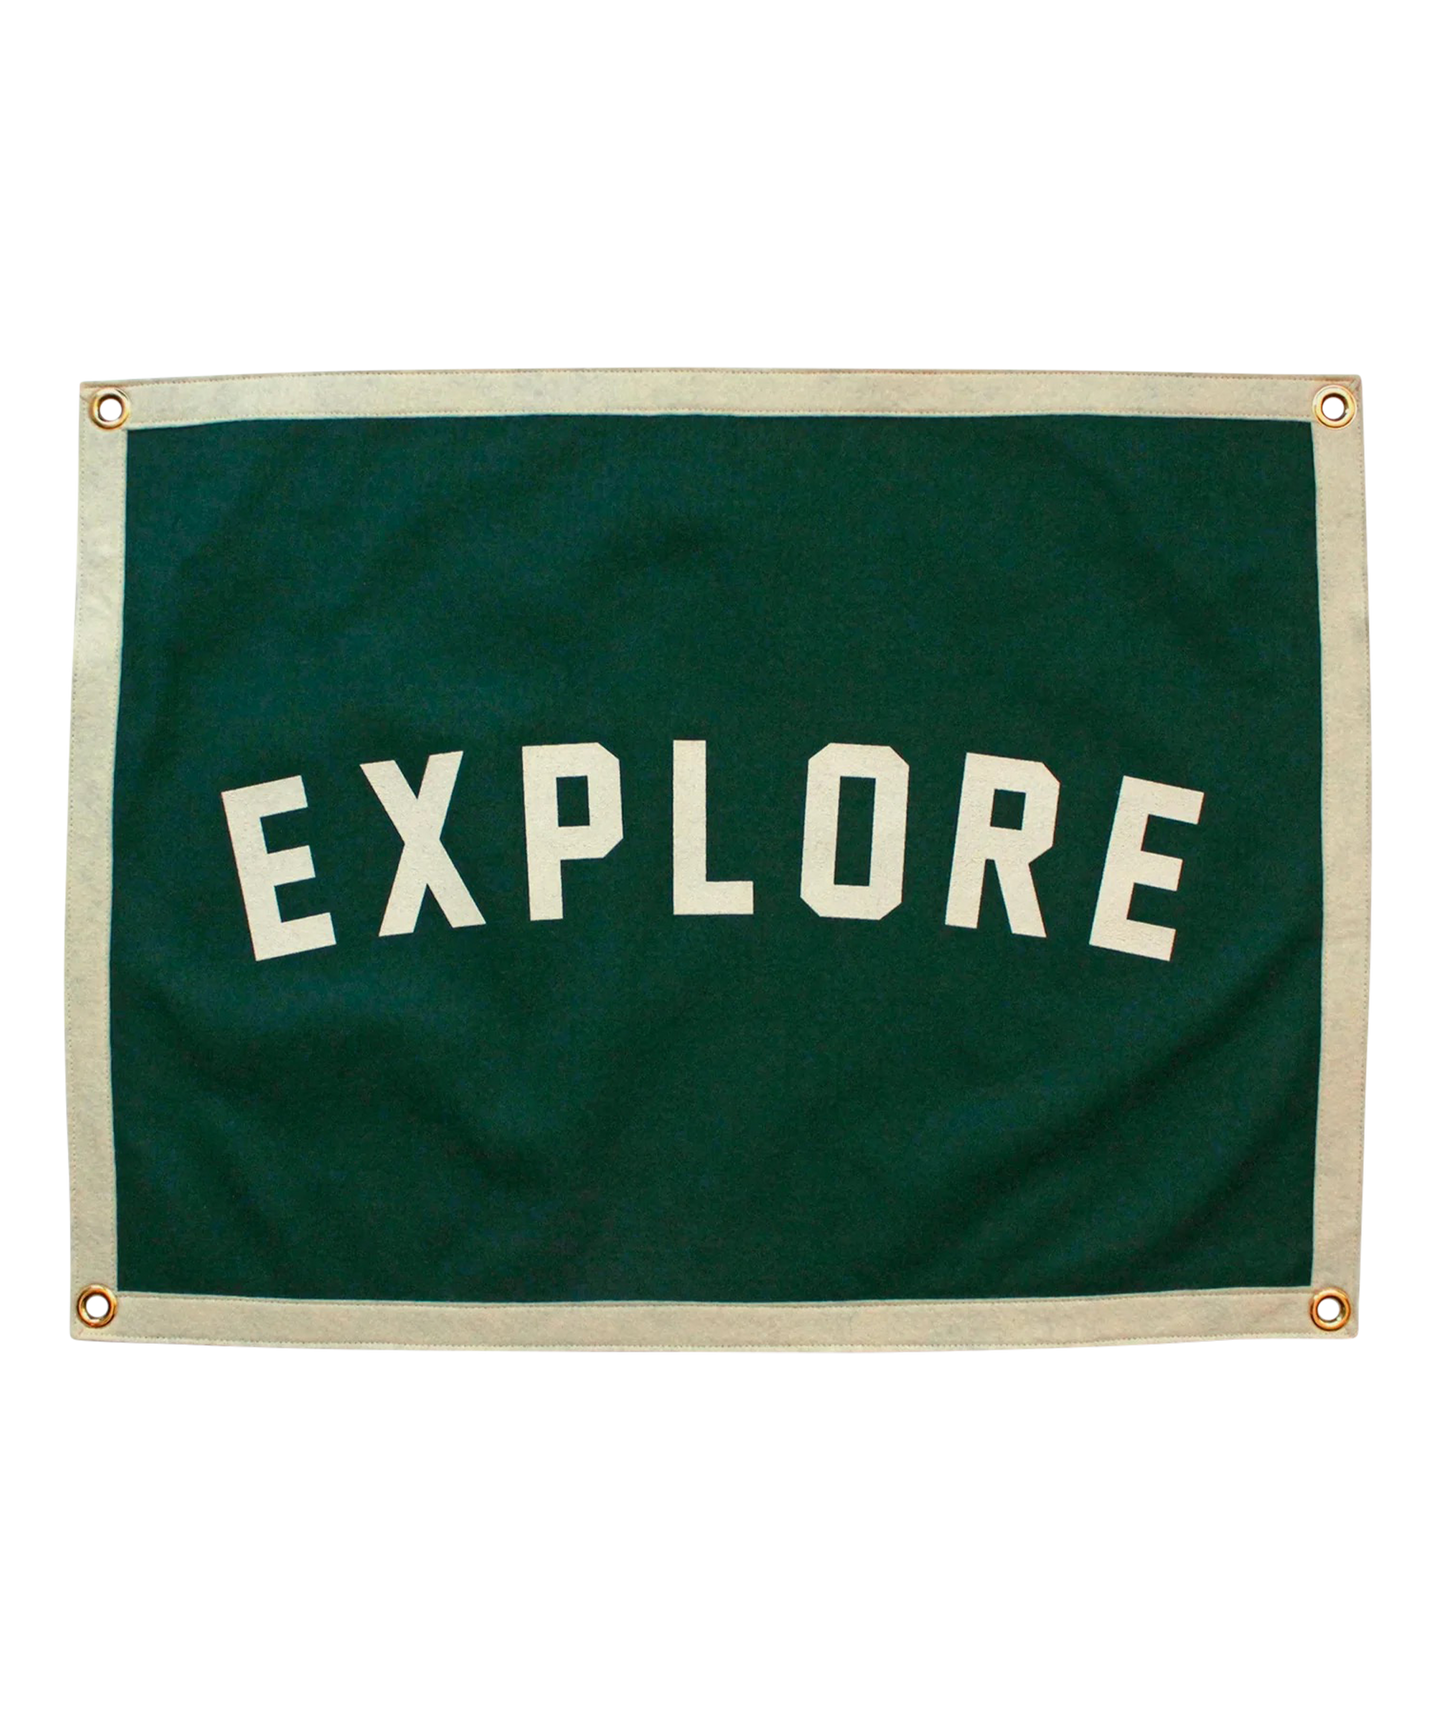 Explore Camp Flag